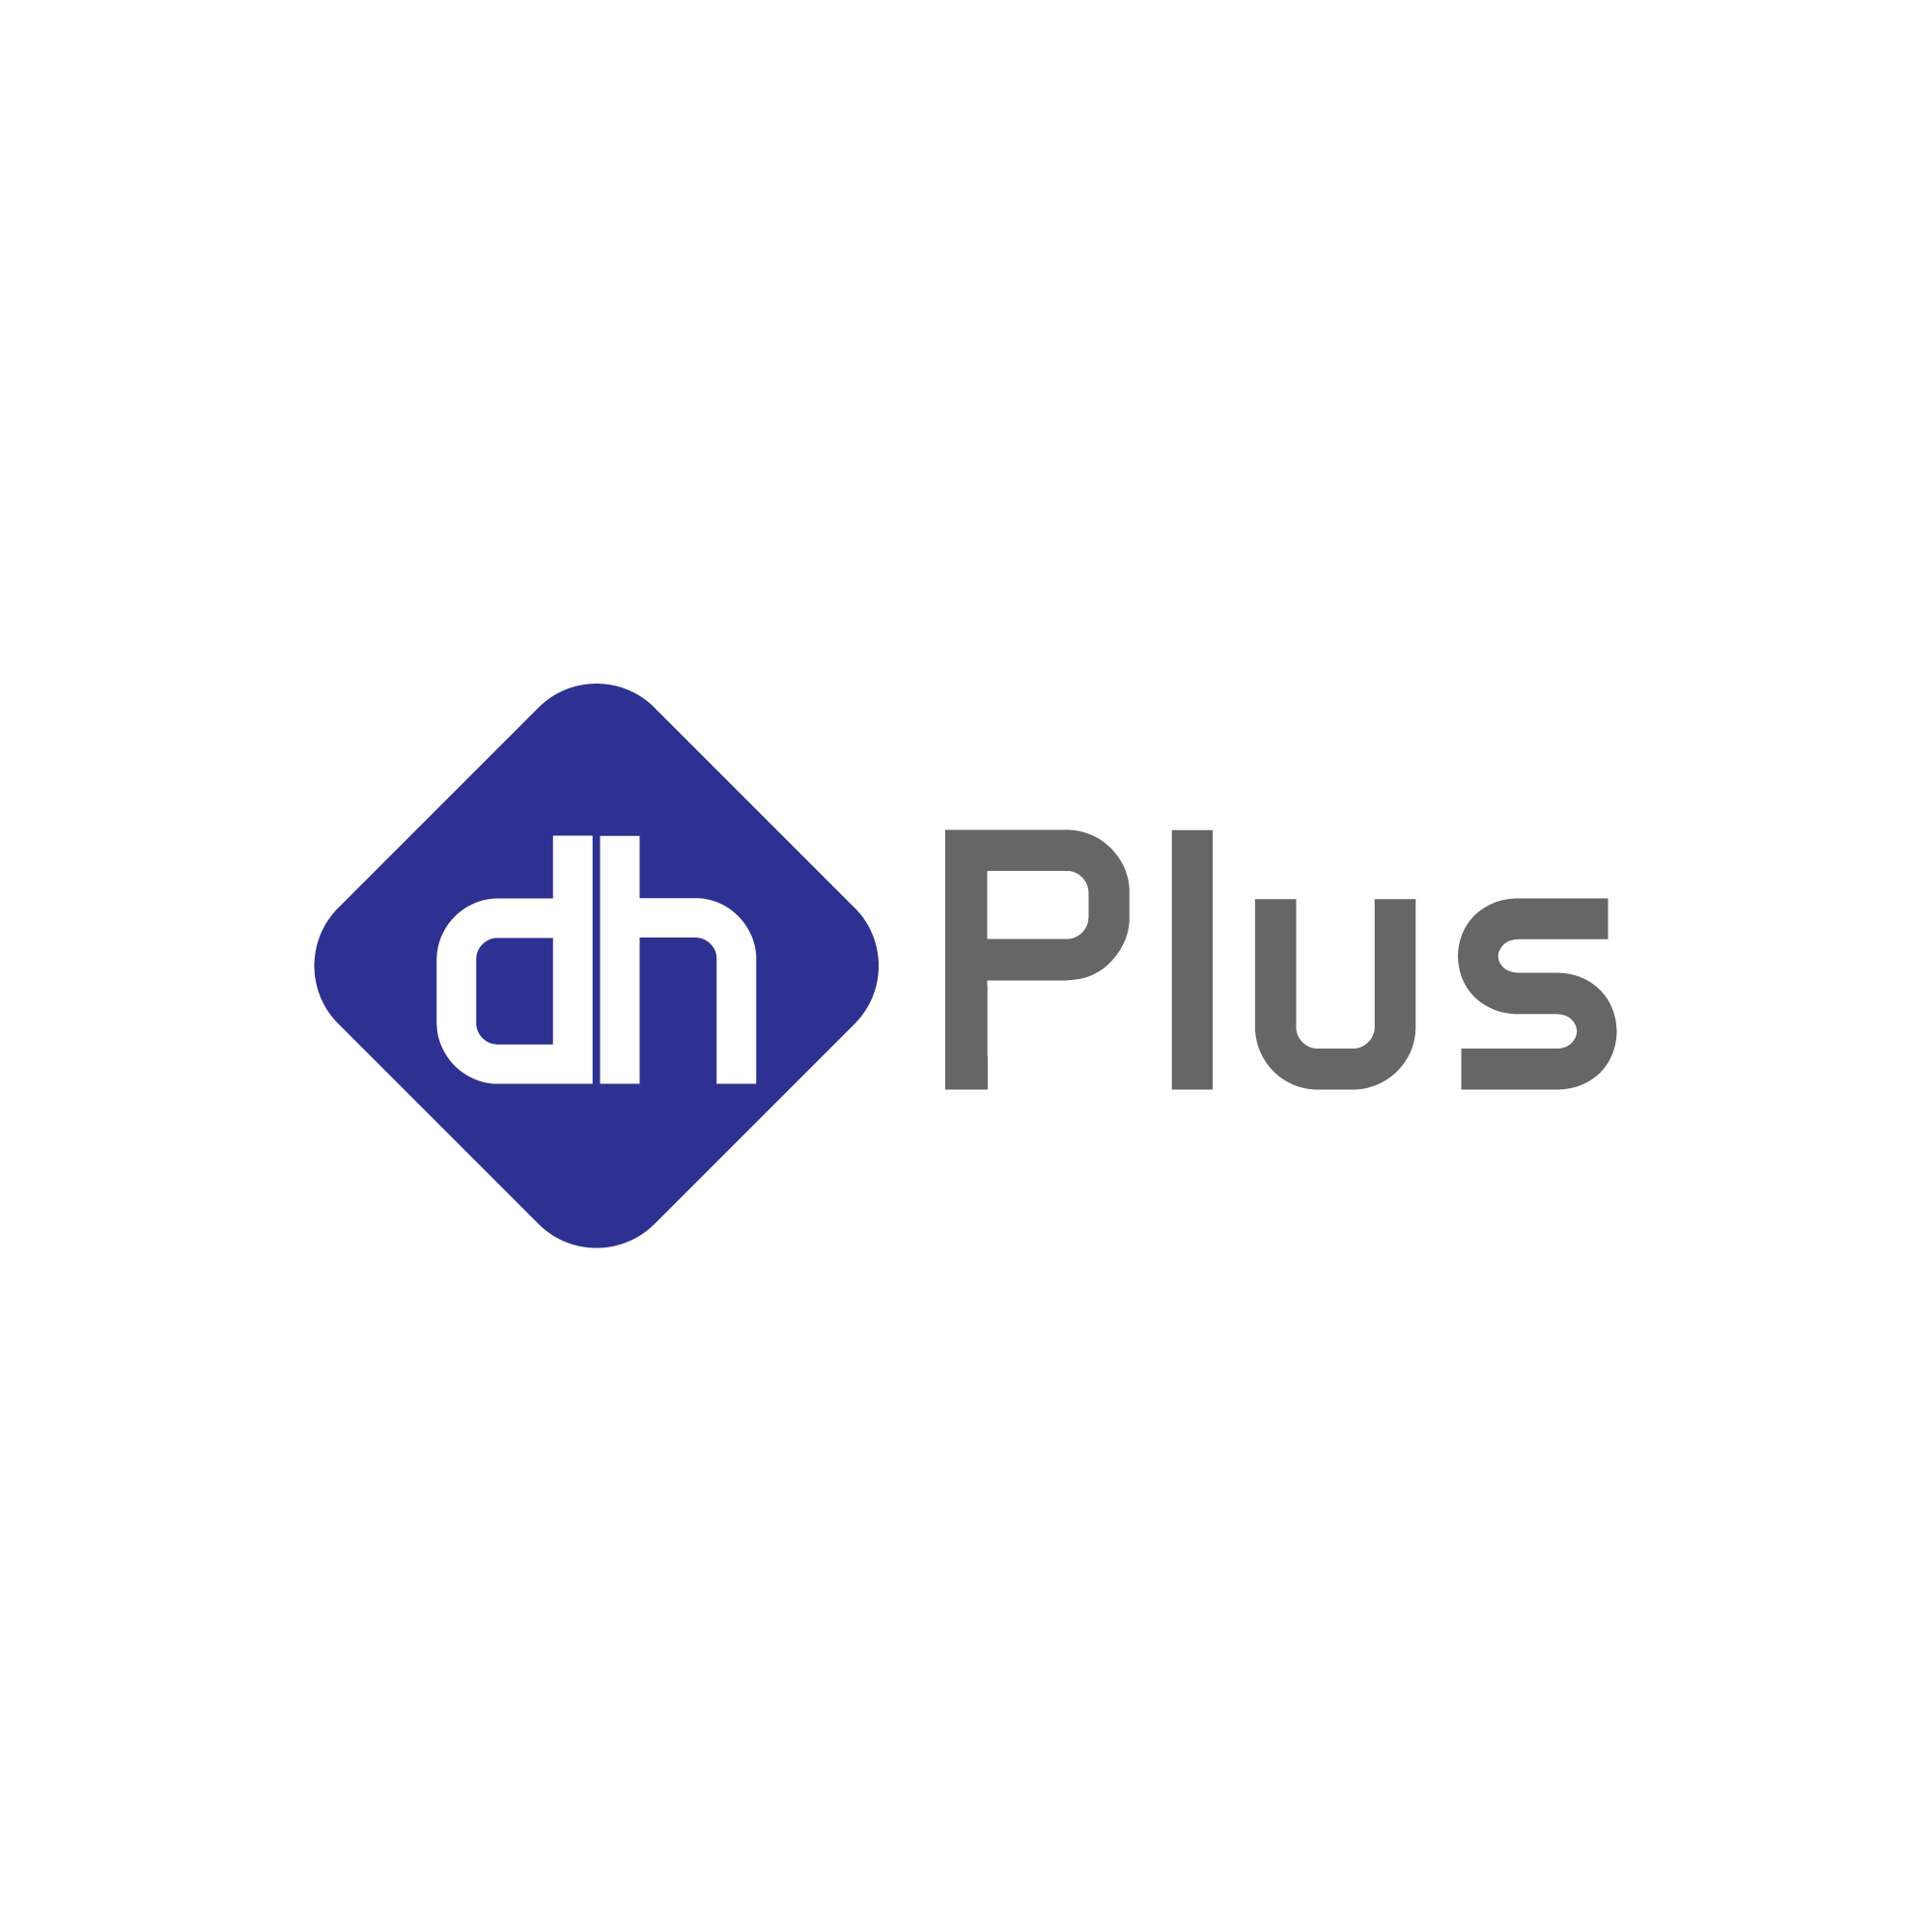 dhPlus logo